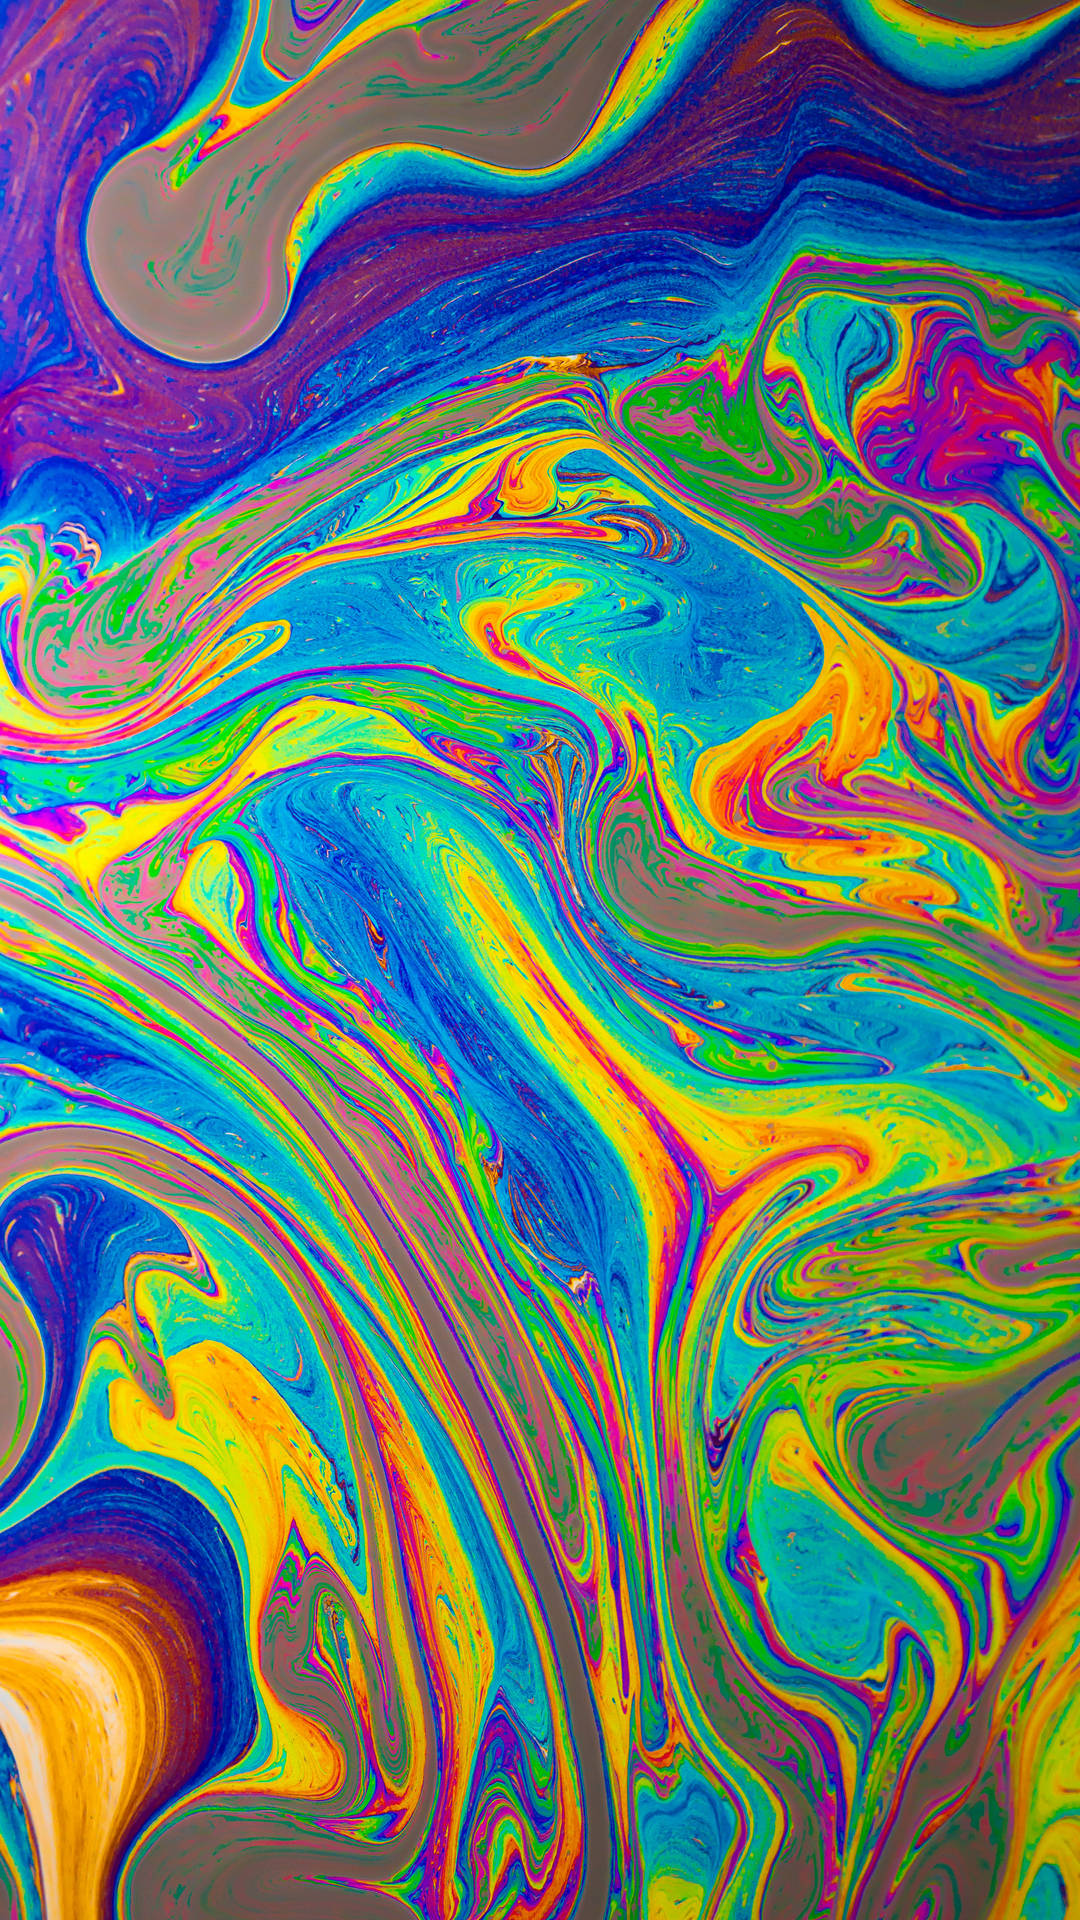 Caption: Vibrant Psychedelic Redmi 4k Wallpaper